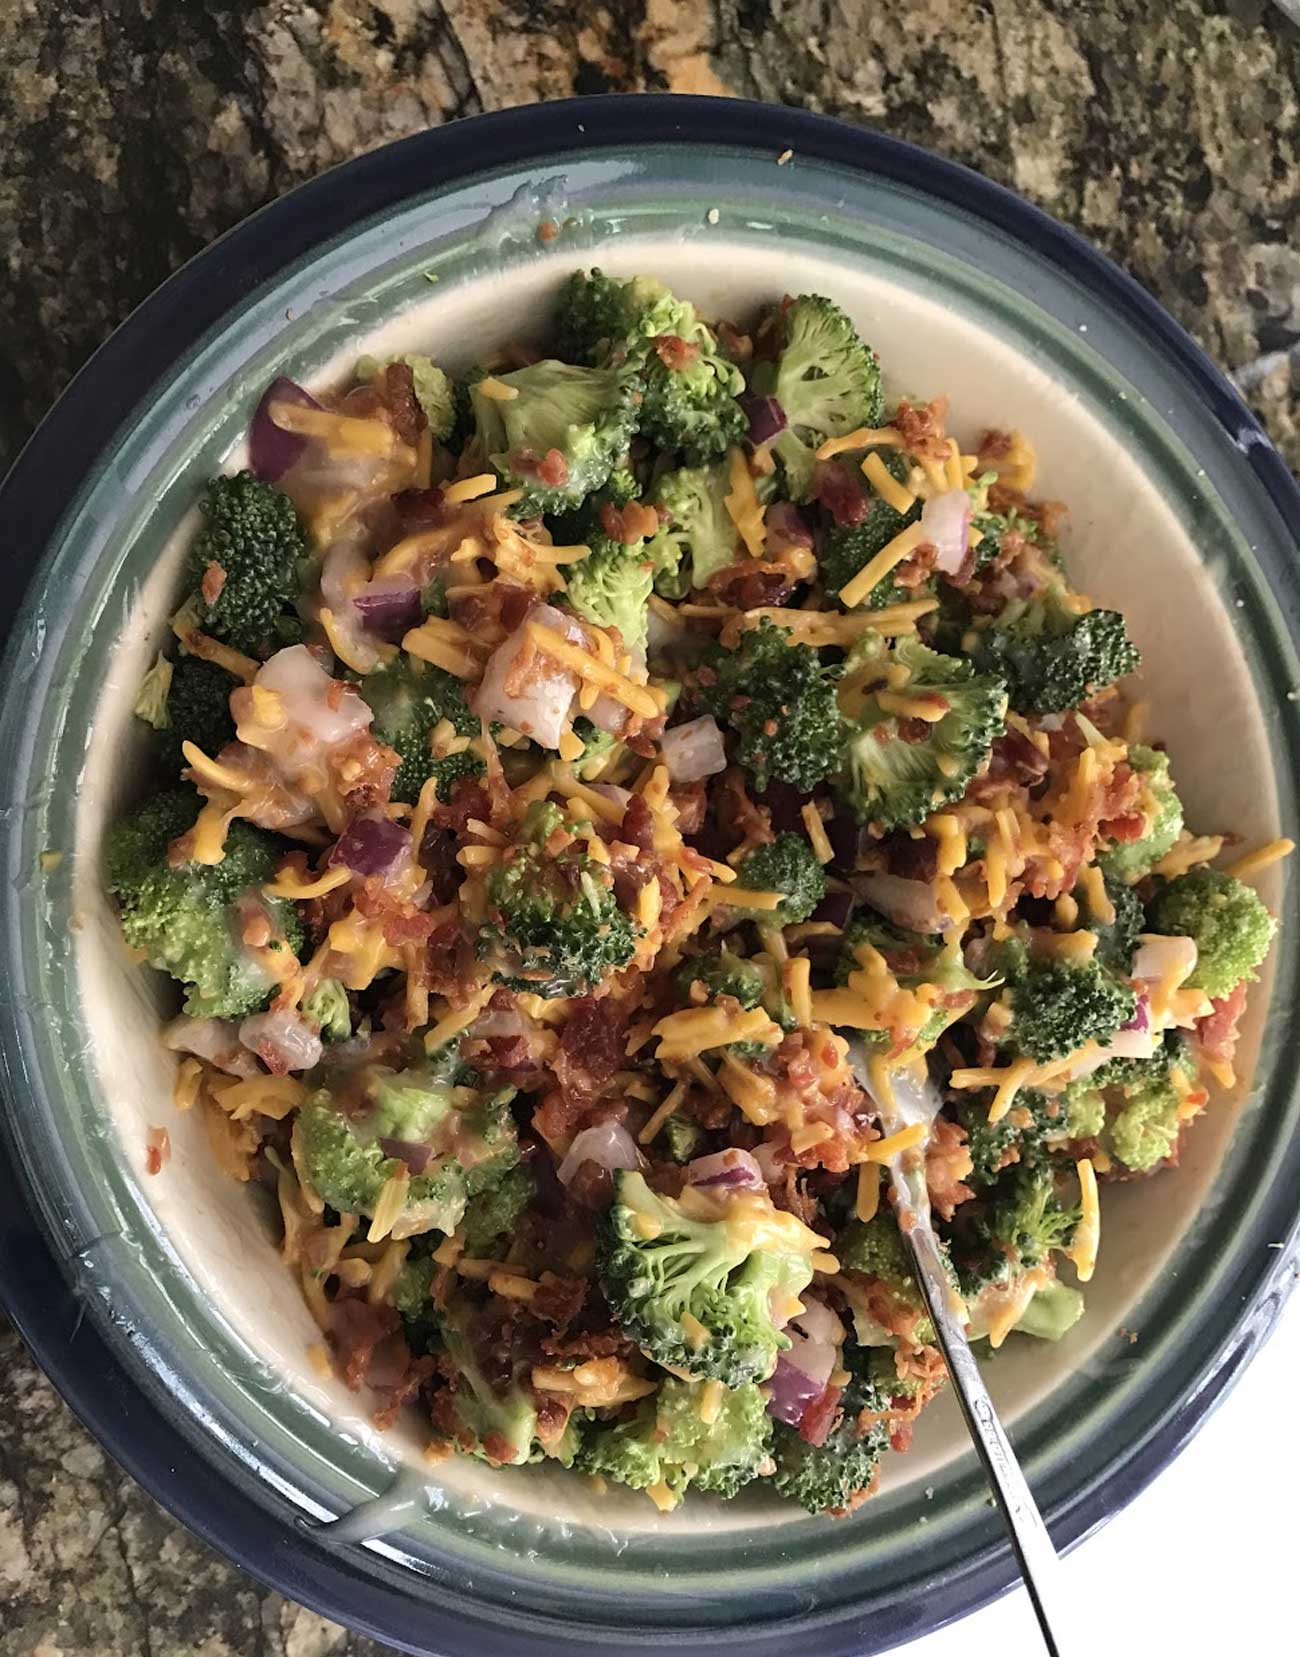 A sweet broccoli salad recipe, lots of flavor